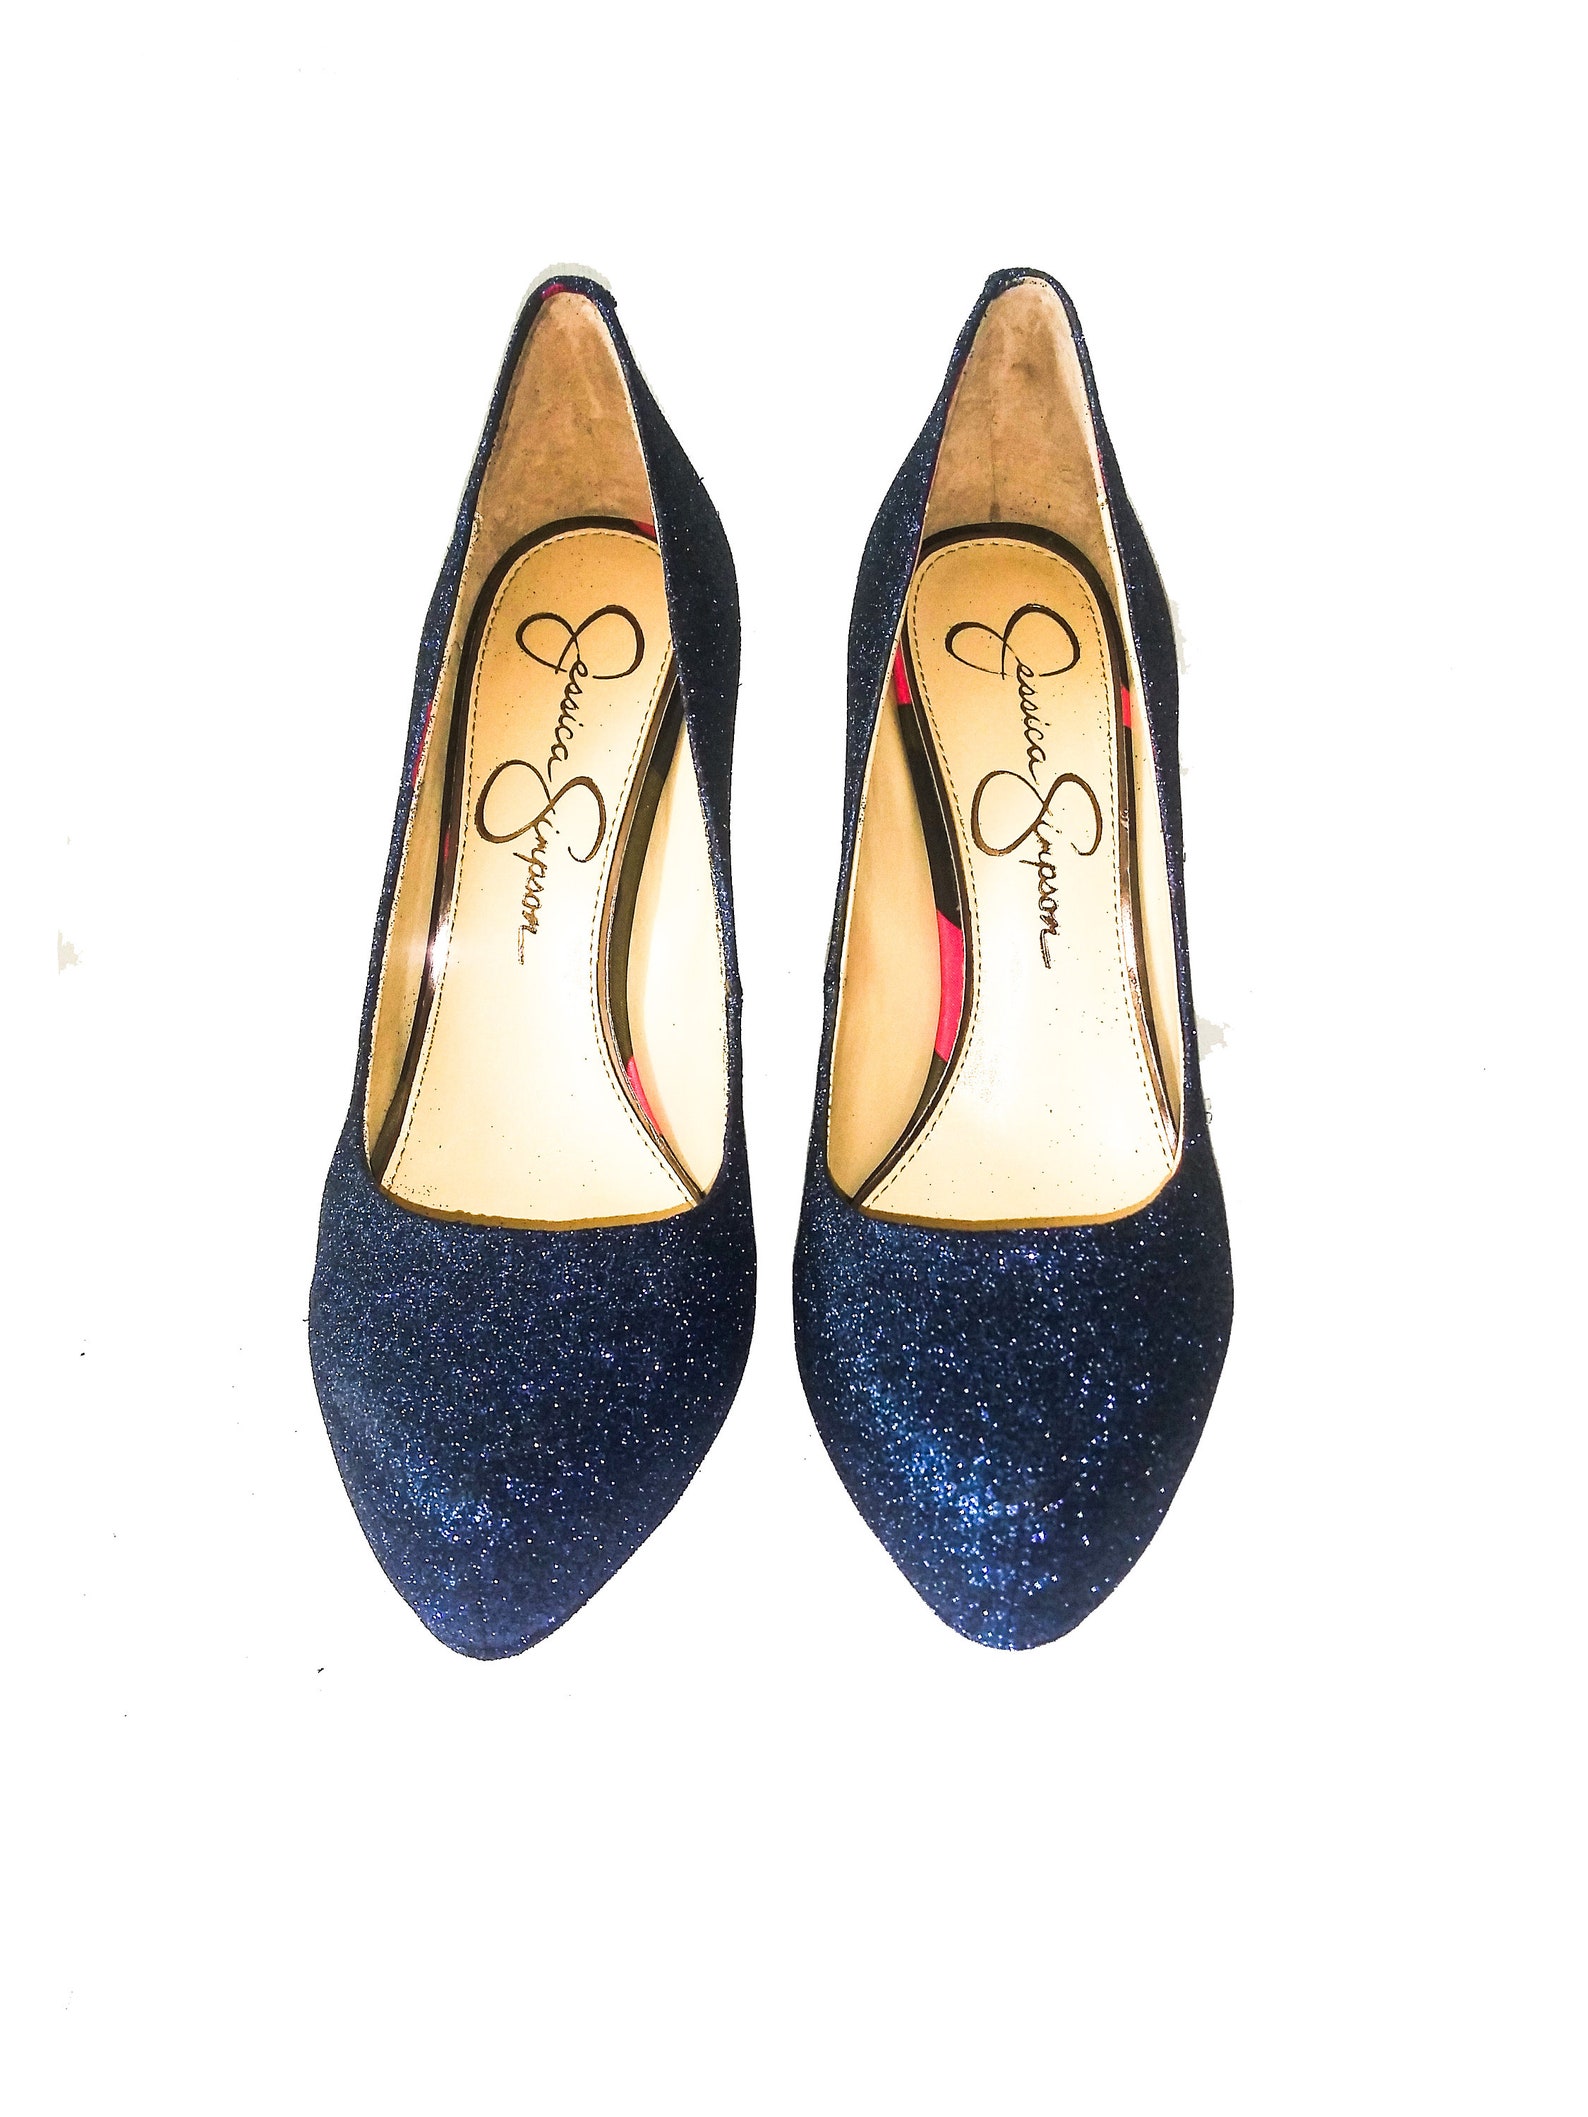 Glitter Heels / Navy Blue Glitter Heels / Wedding Shoes / | Etsy UK